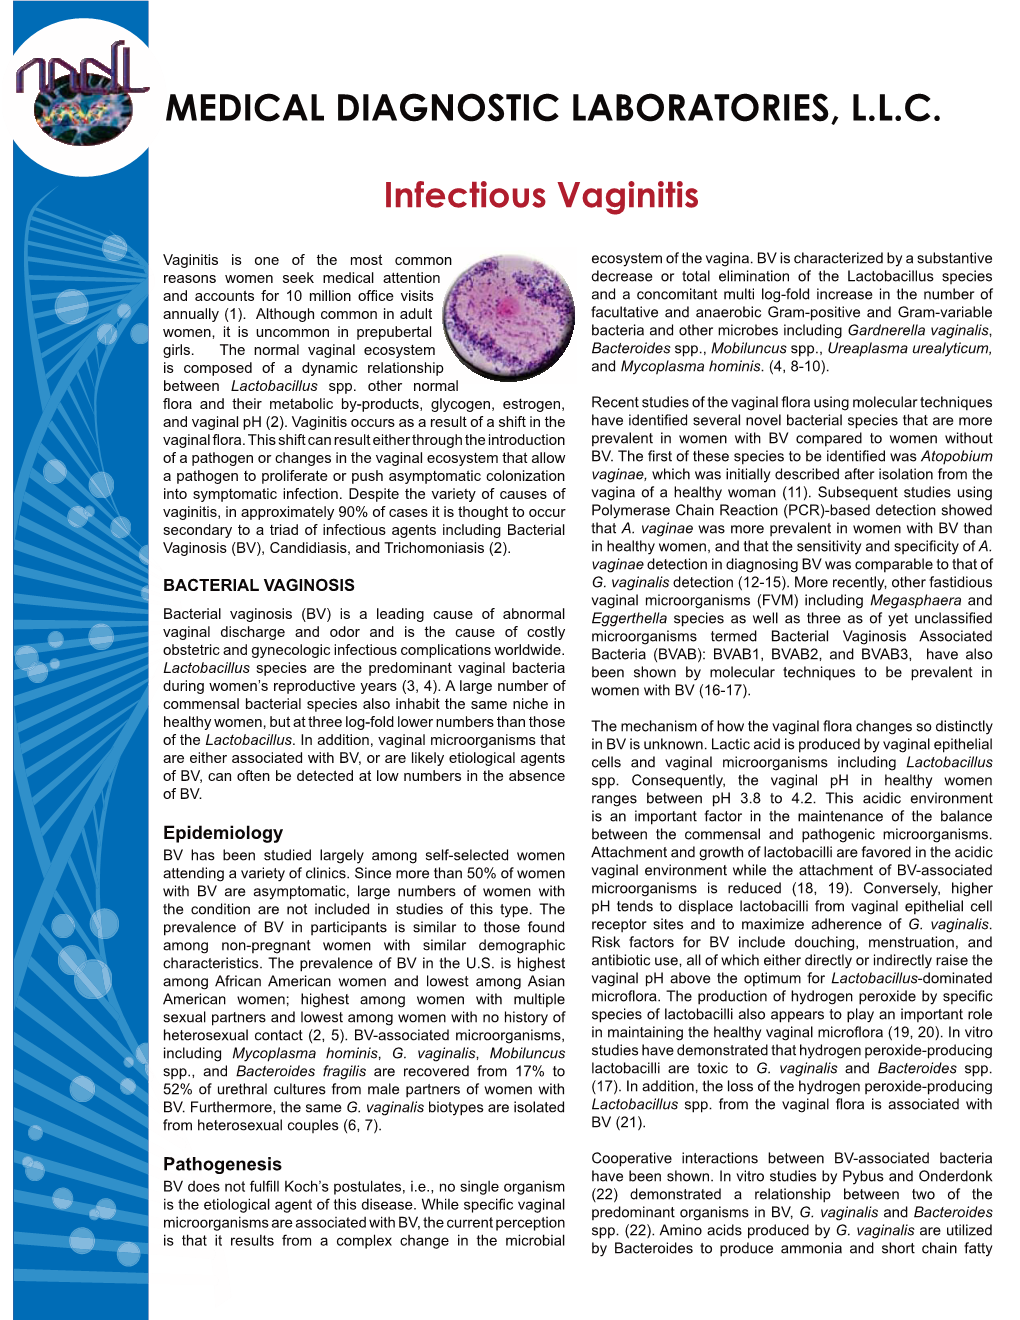 Infectious Vaginitis